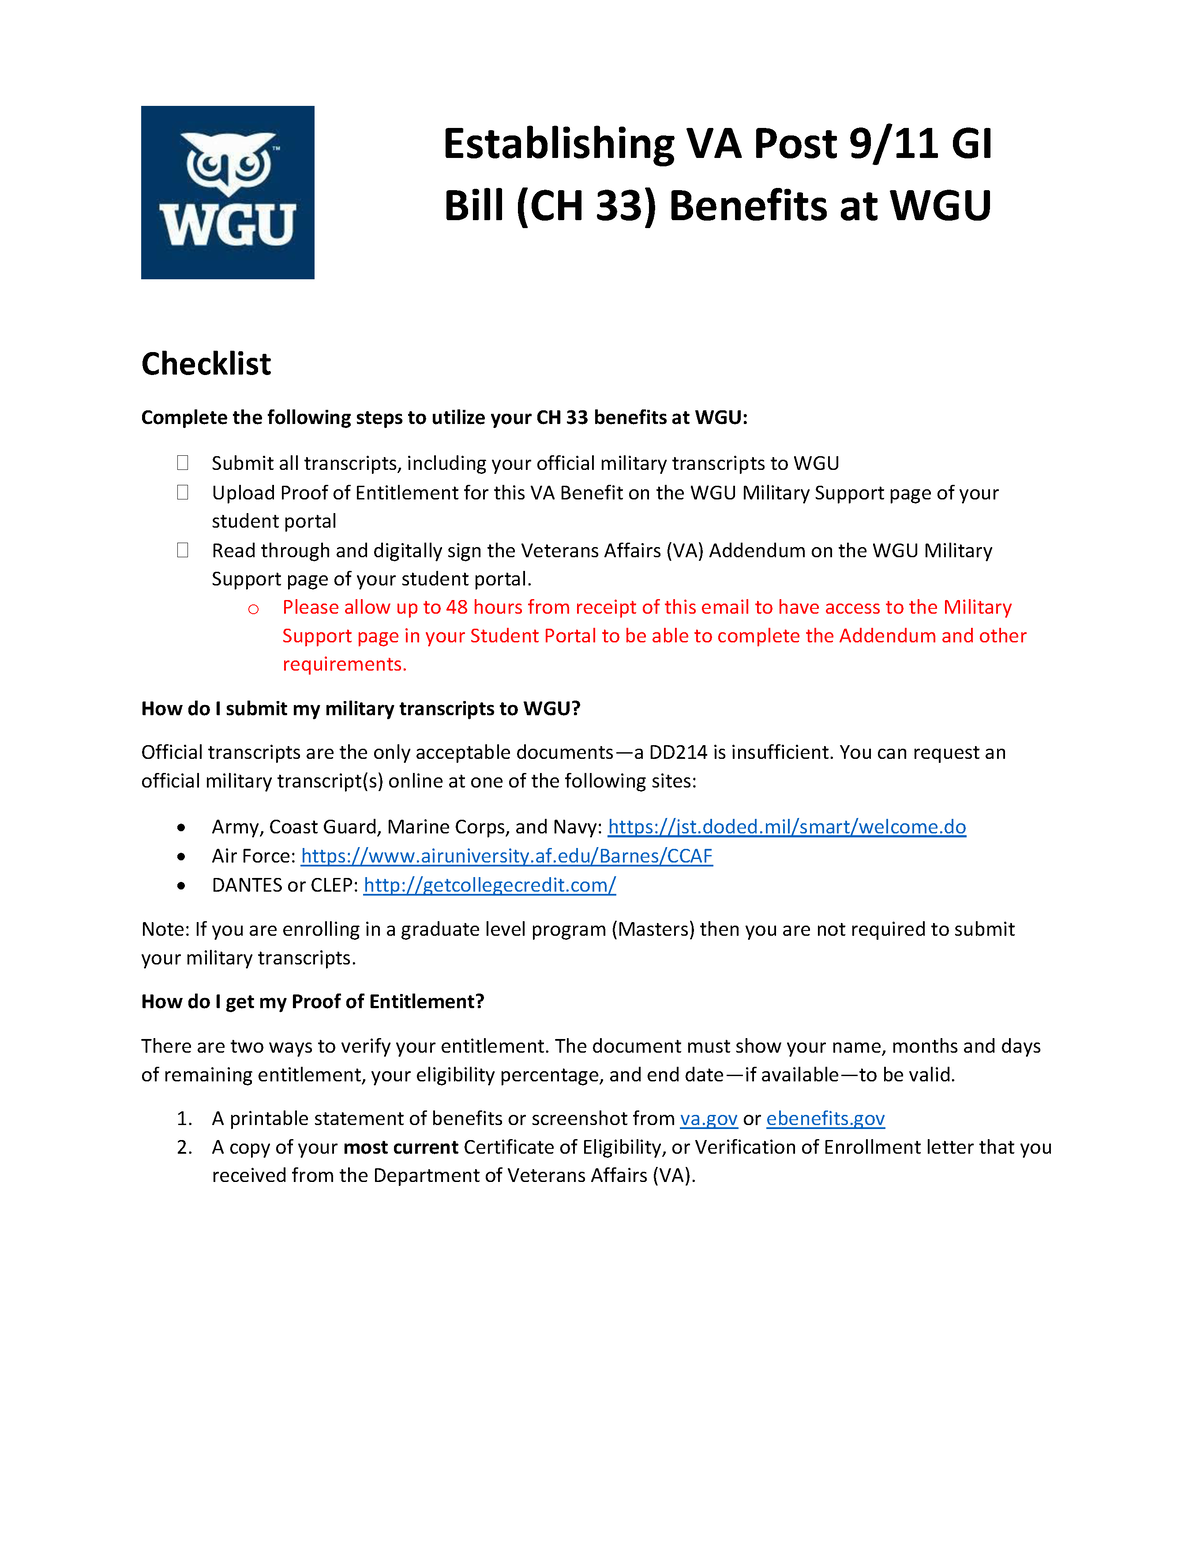 Establishing Your VA Post 911 Benefits at WGU Checklist Checklist